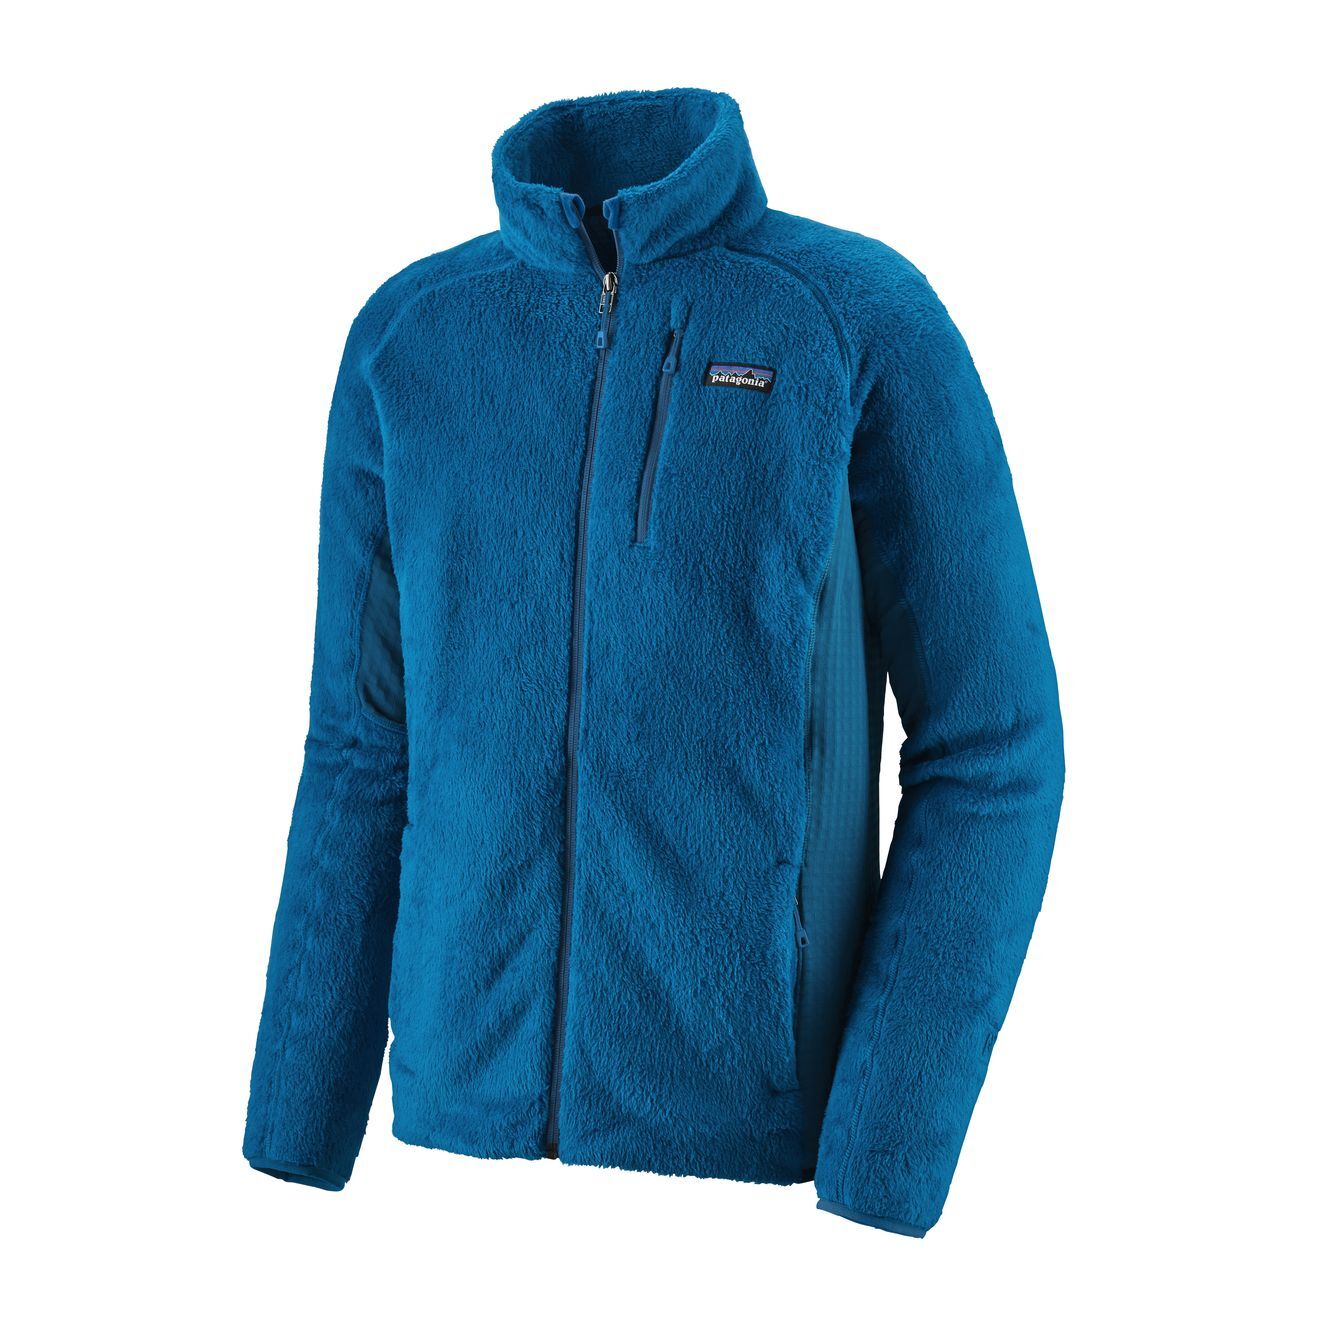 Patagonia - R2 Jacket - Fleece jacket - Men's